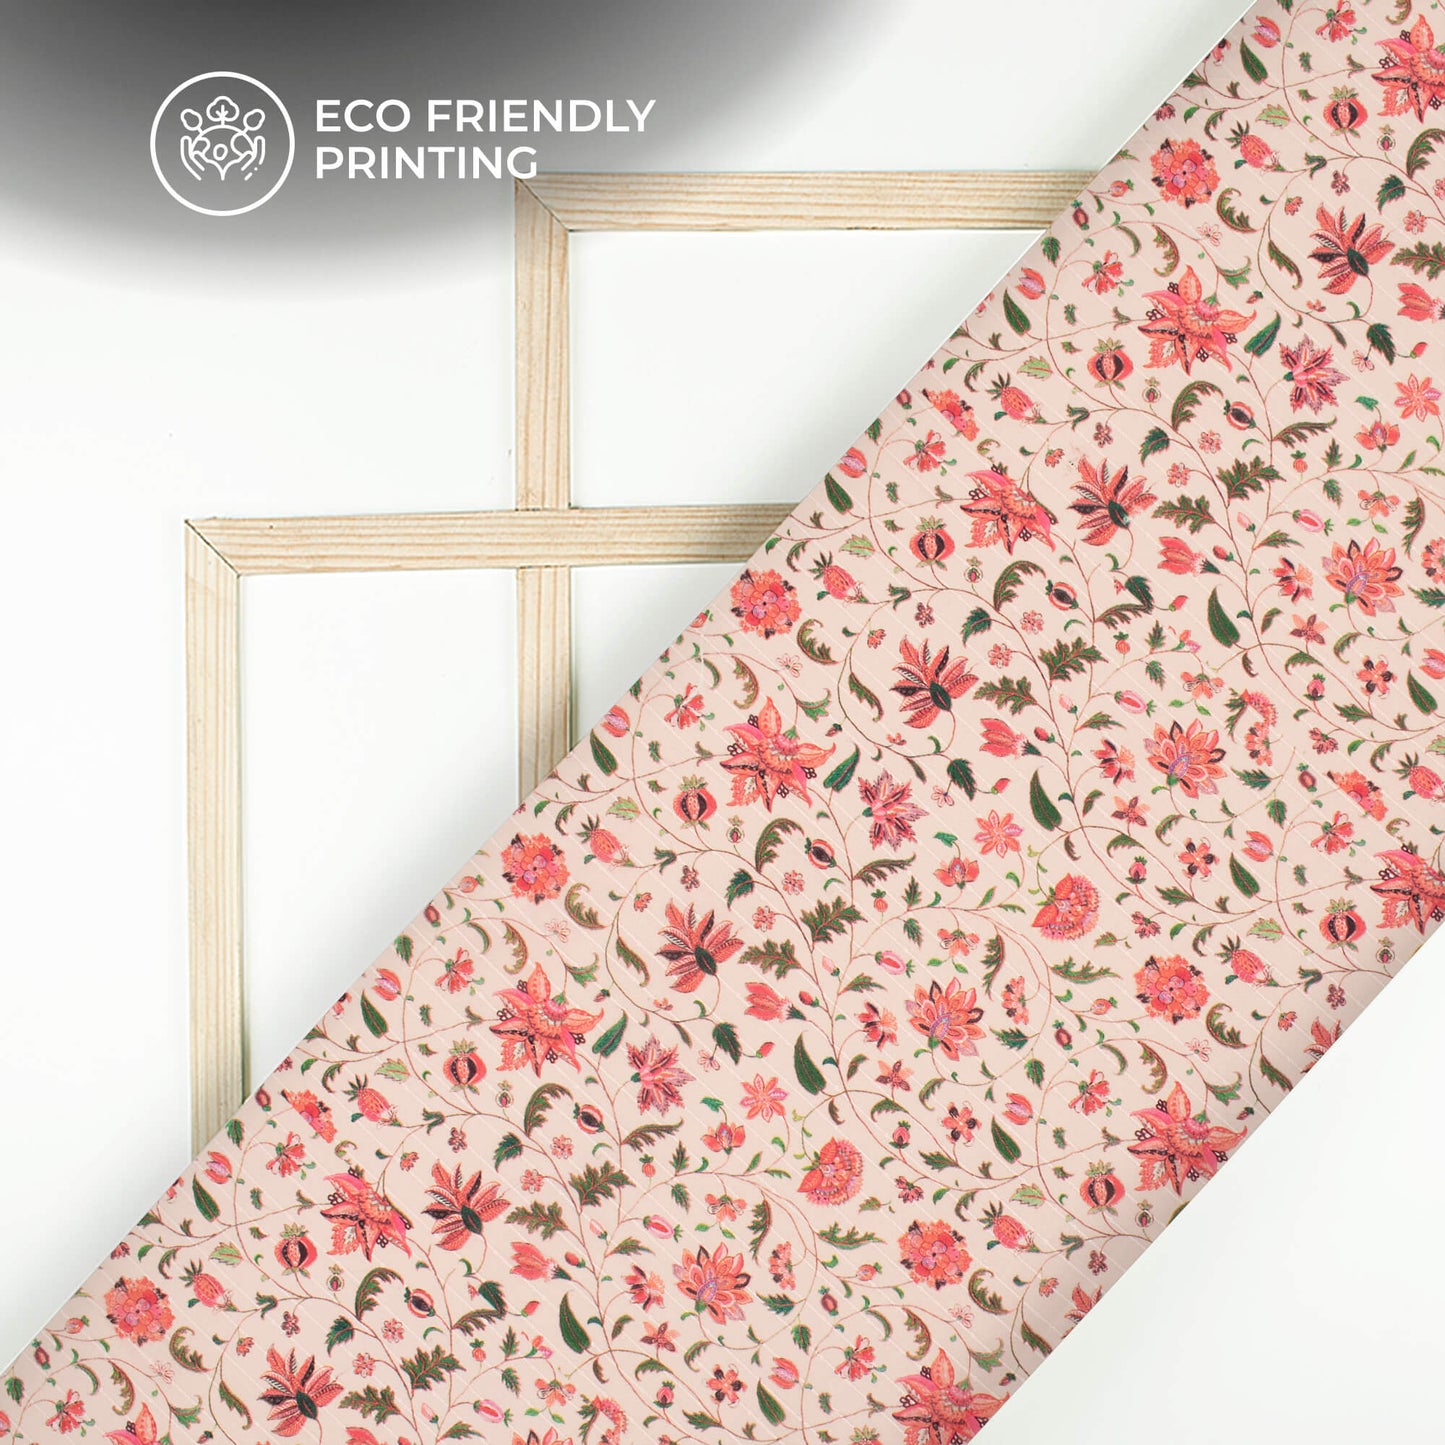 Blush Pink And Green Floral Digital Print Chiffon Sparkle Fabric